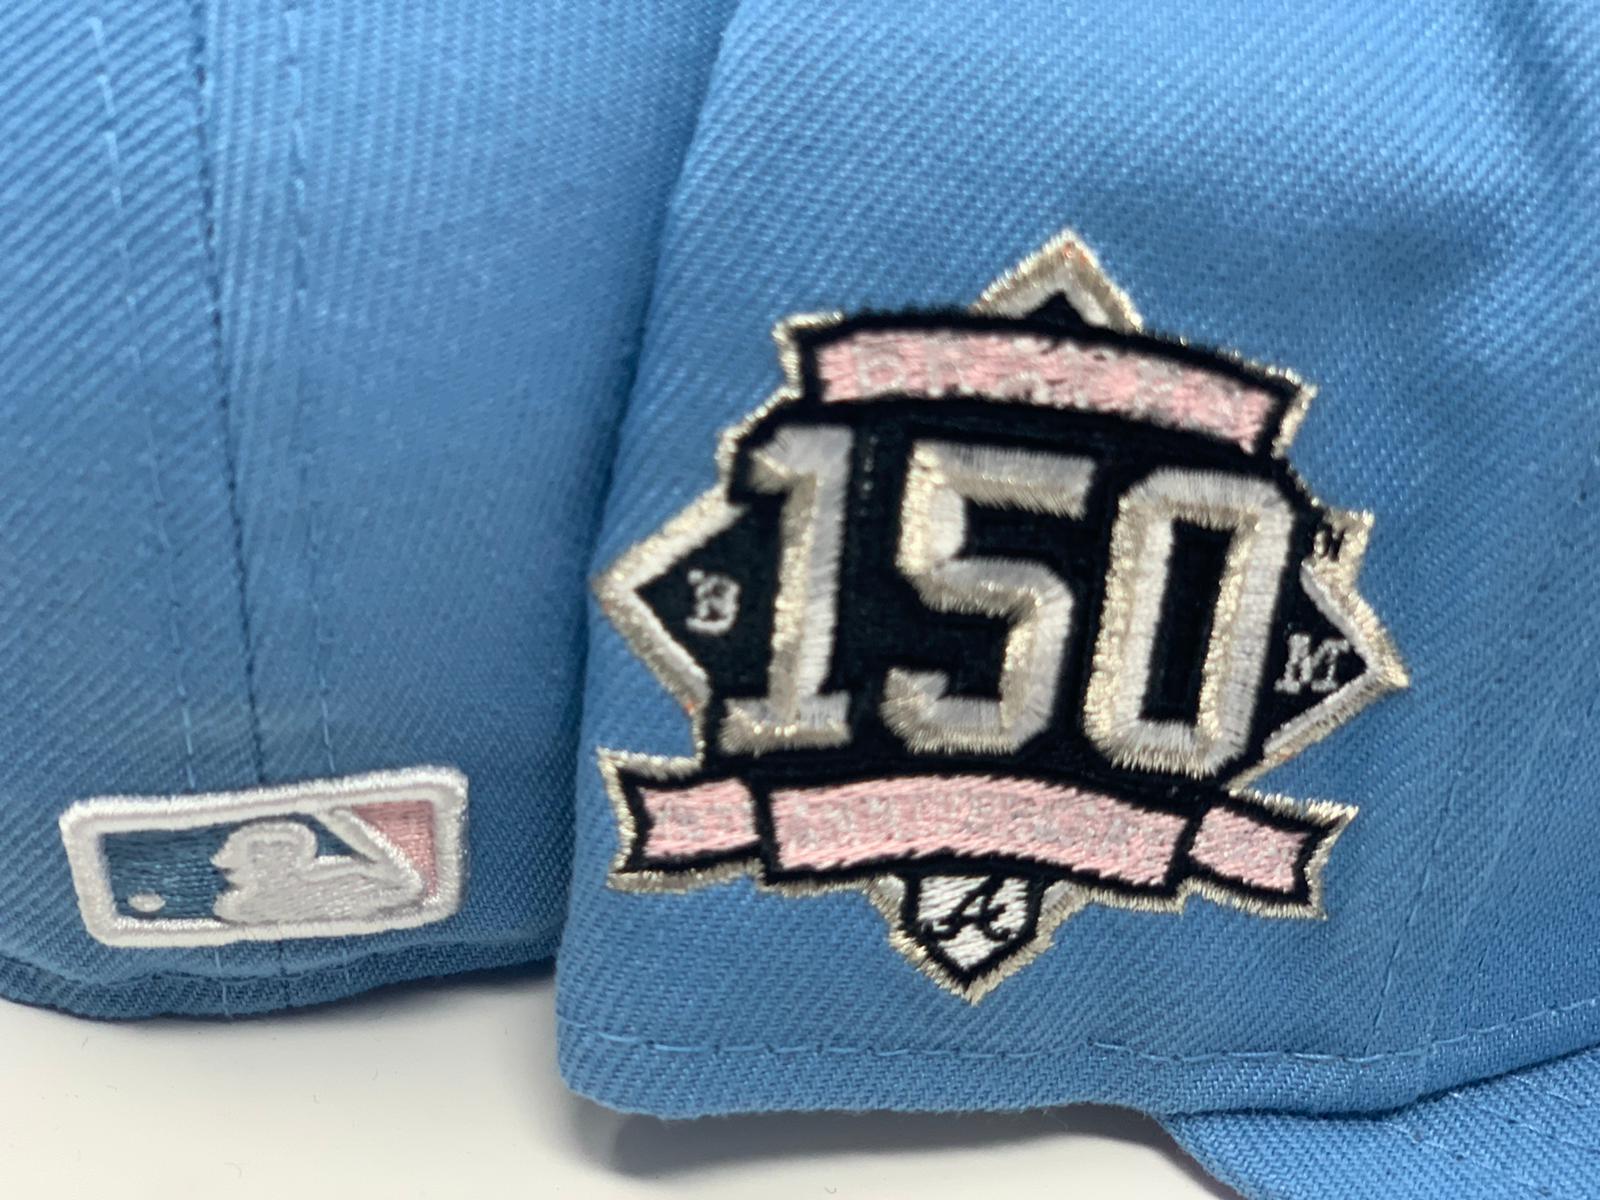 Atlanta Braves SKY BLUE DaBu Fitted Hat by New Era